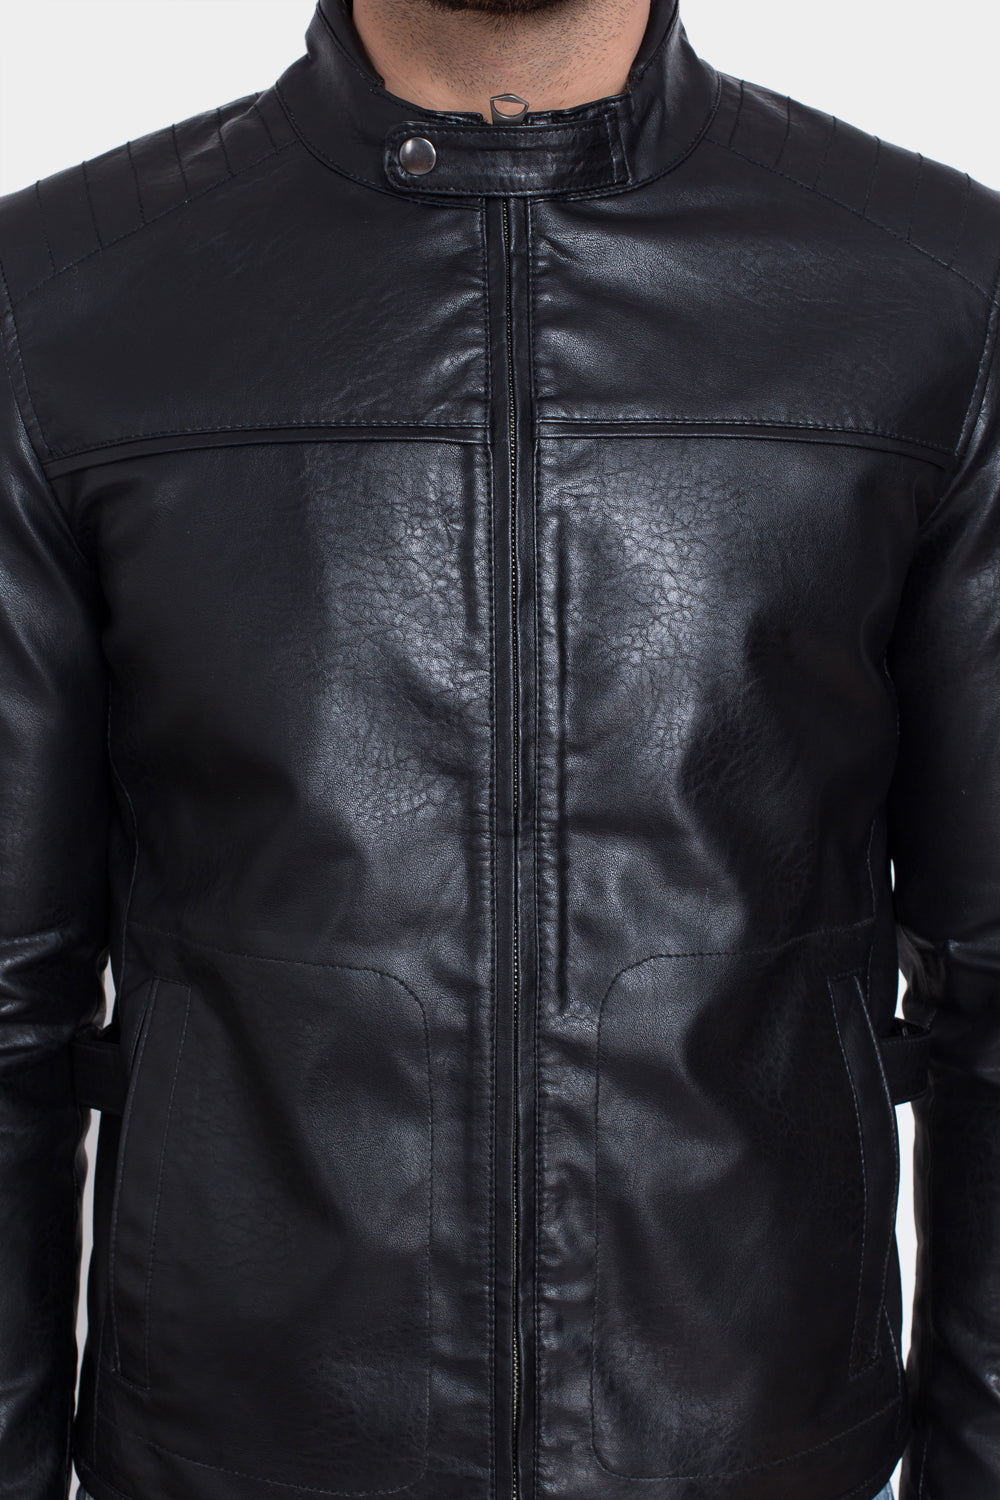 Justanned Raven Black Leather Jacket